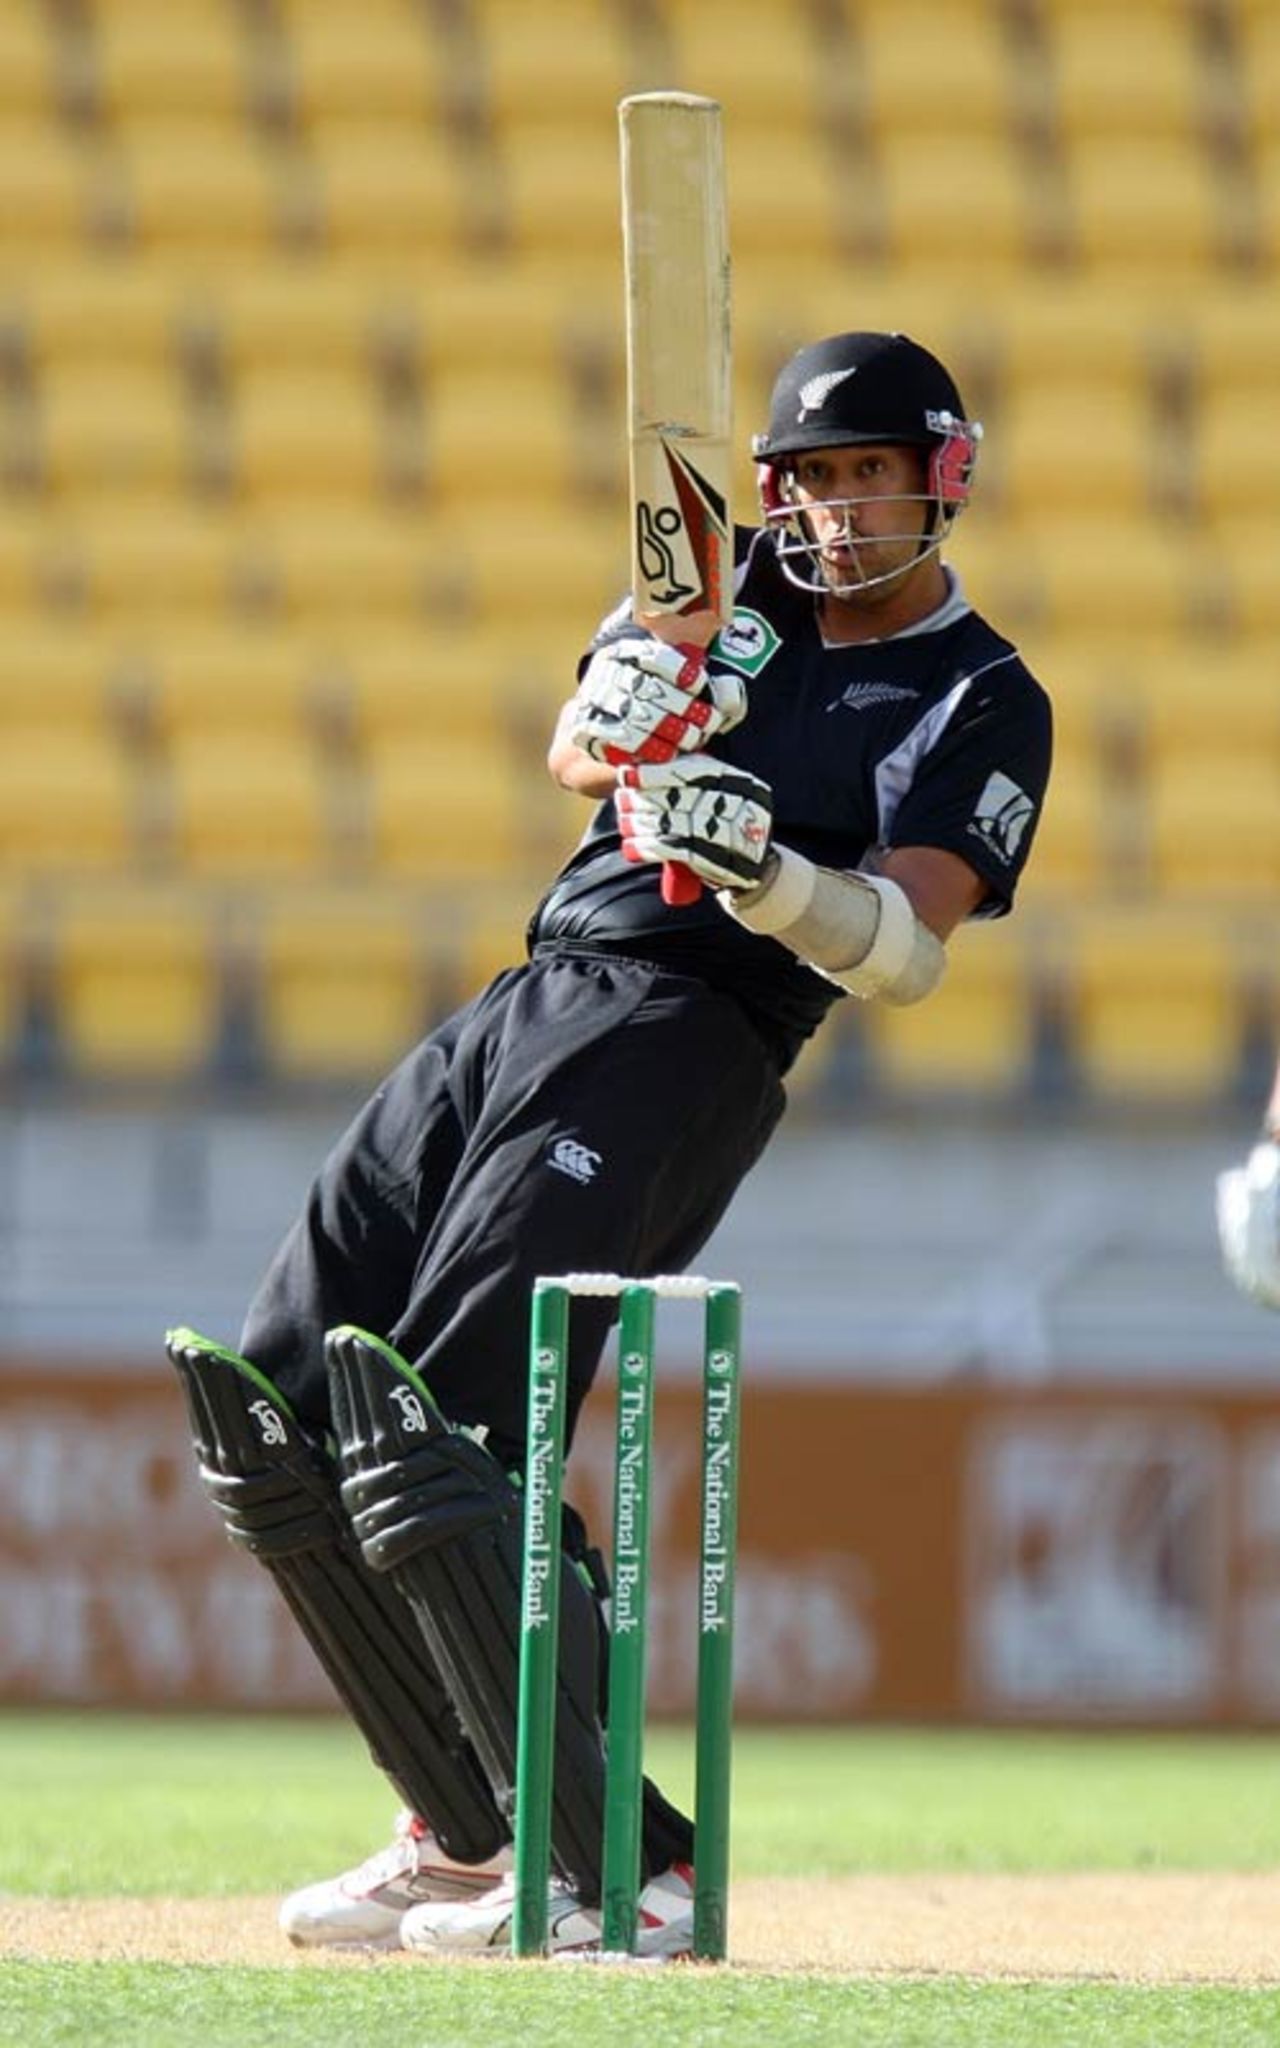 Daryl Tuffey watches the ball sail away behind square, New Zealand v Australia, 5th ODI, Wellington, March 13, 2010